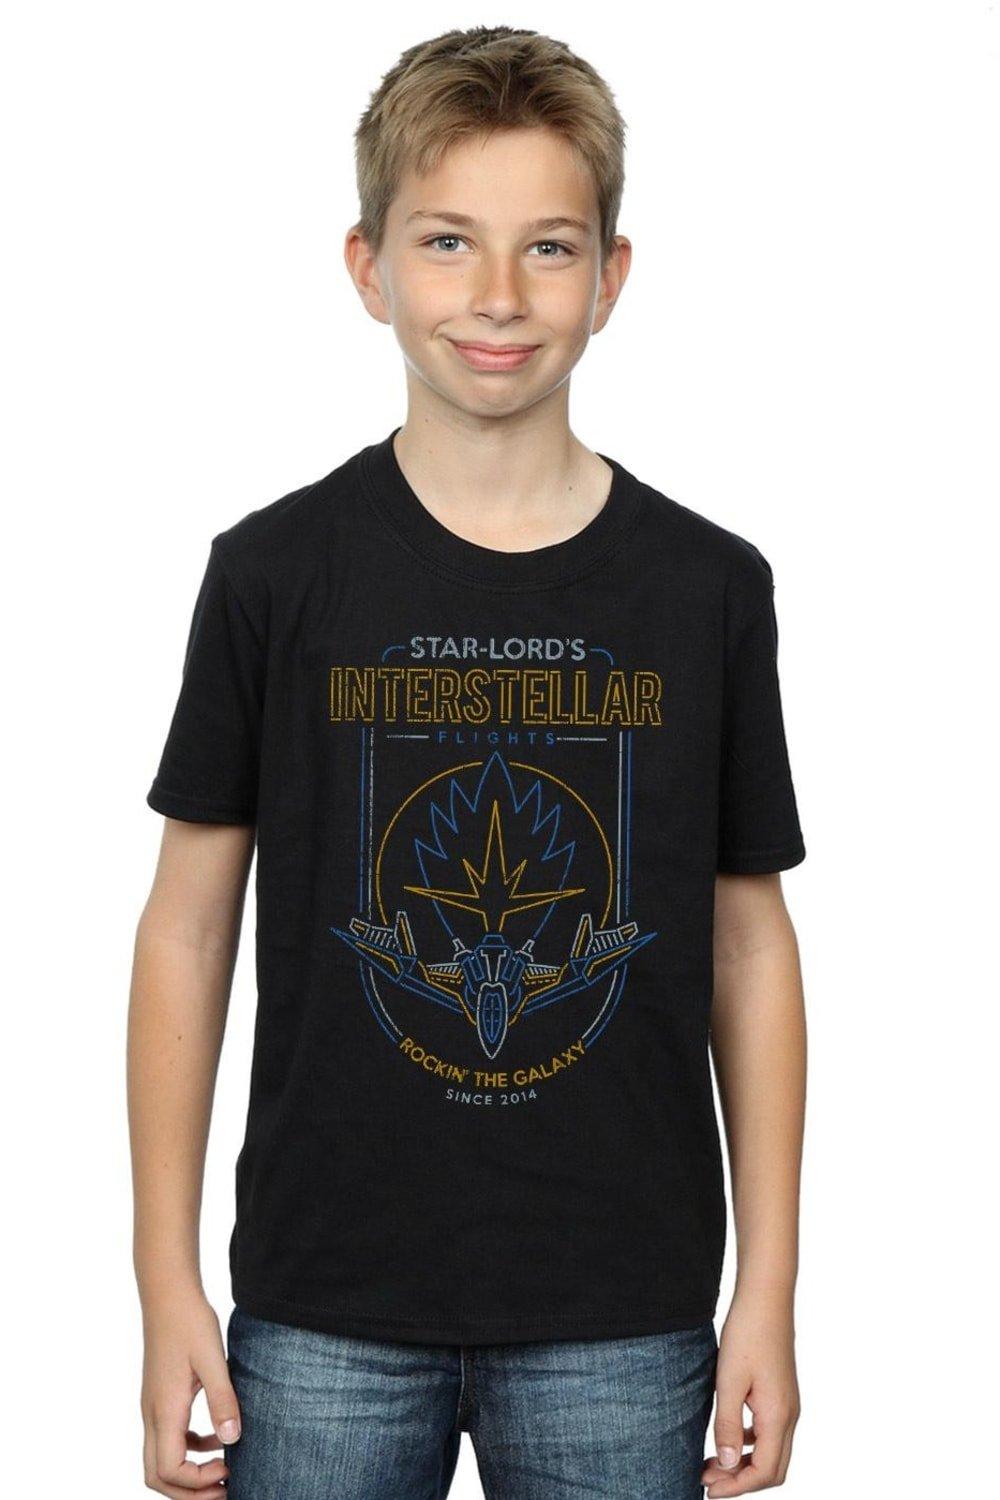 Guardians Of The Galaxy Interstellar Flights T-Shirt